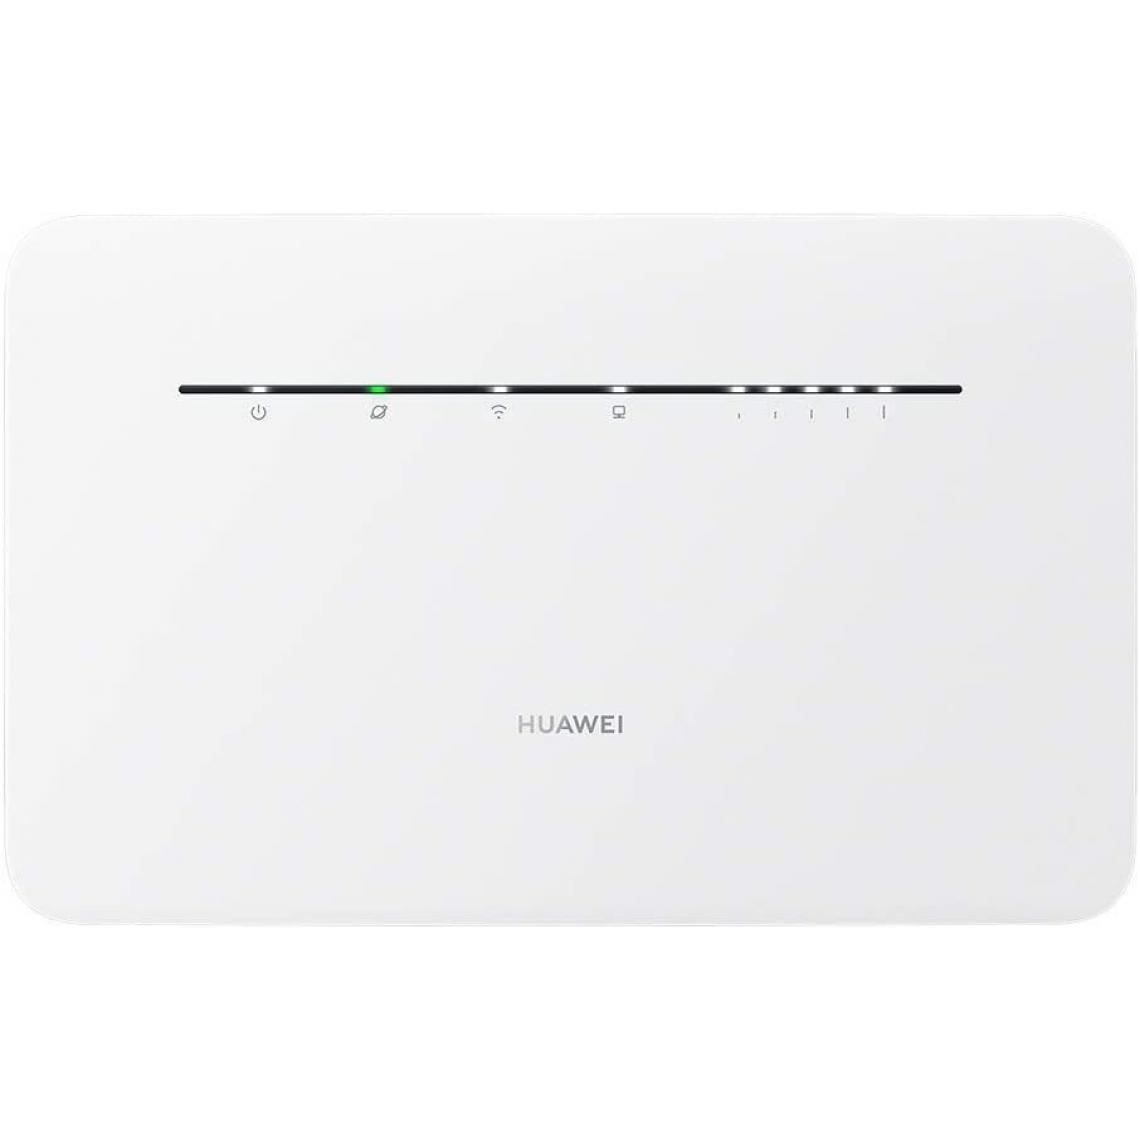 Chrono - HUAWEI B535-232 LTE Cat7 4G/LTE Routerï¼Blanc - Modem / Routeur / Points d'accès